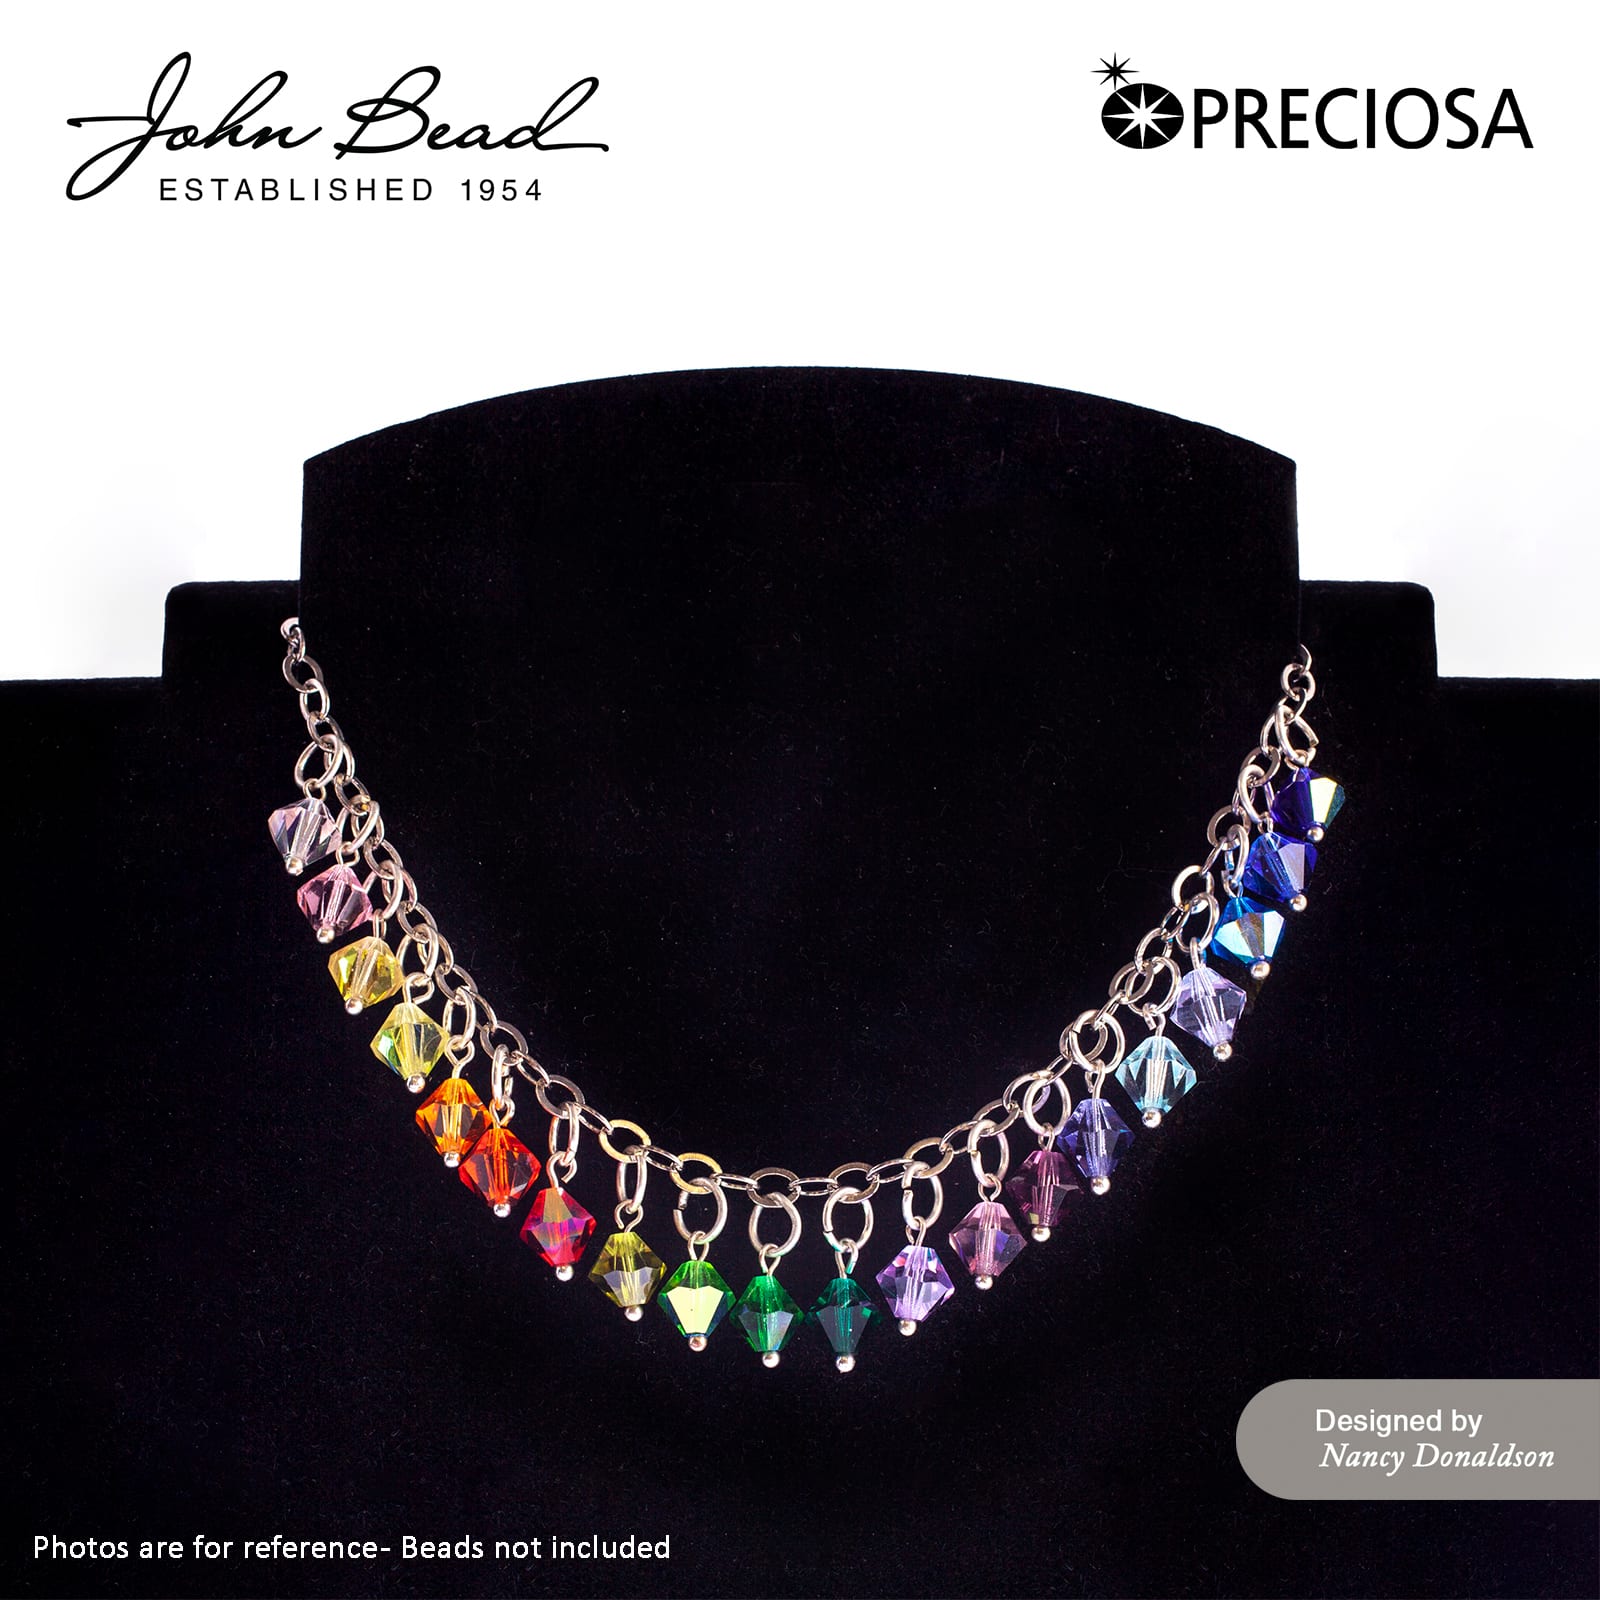 John Bead Preciosa 4mm Czech Crystal Rondelle Beads, 40ct.